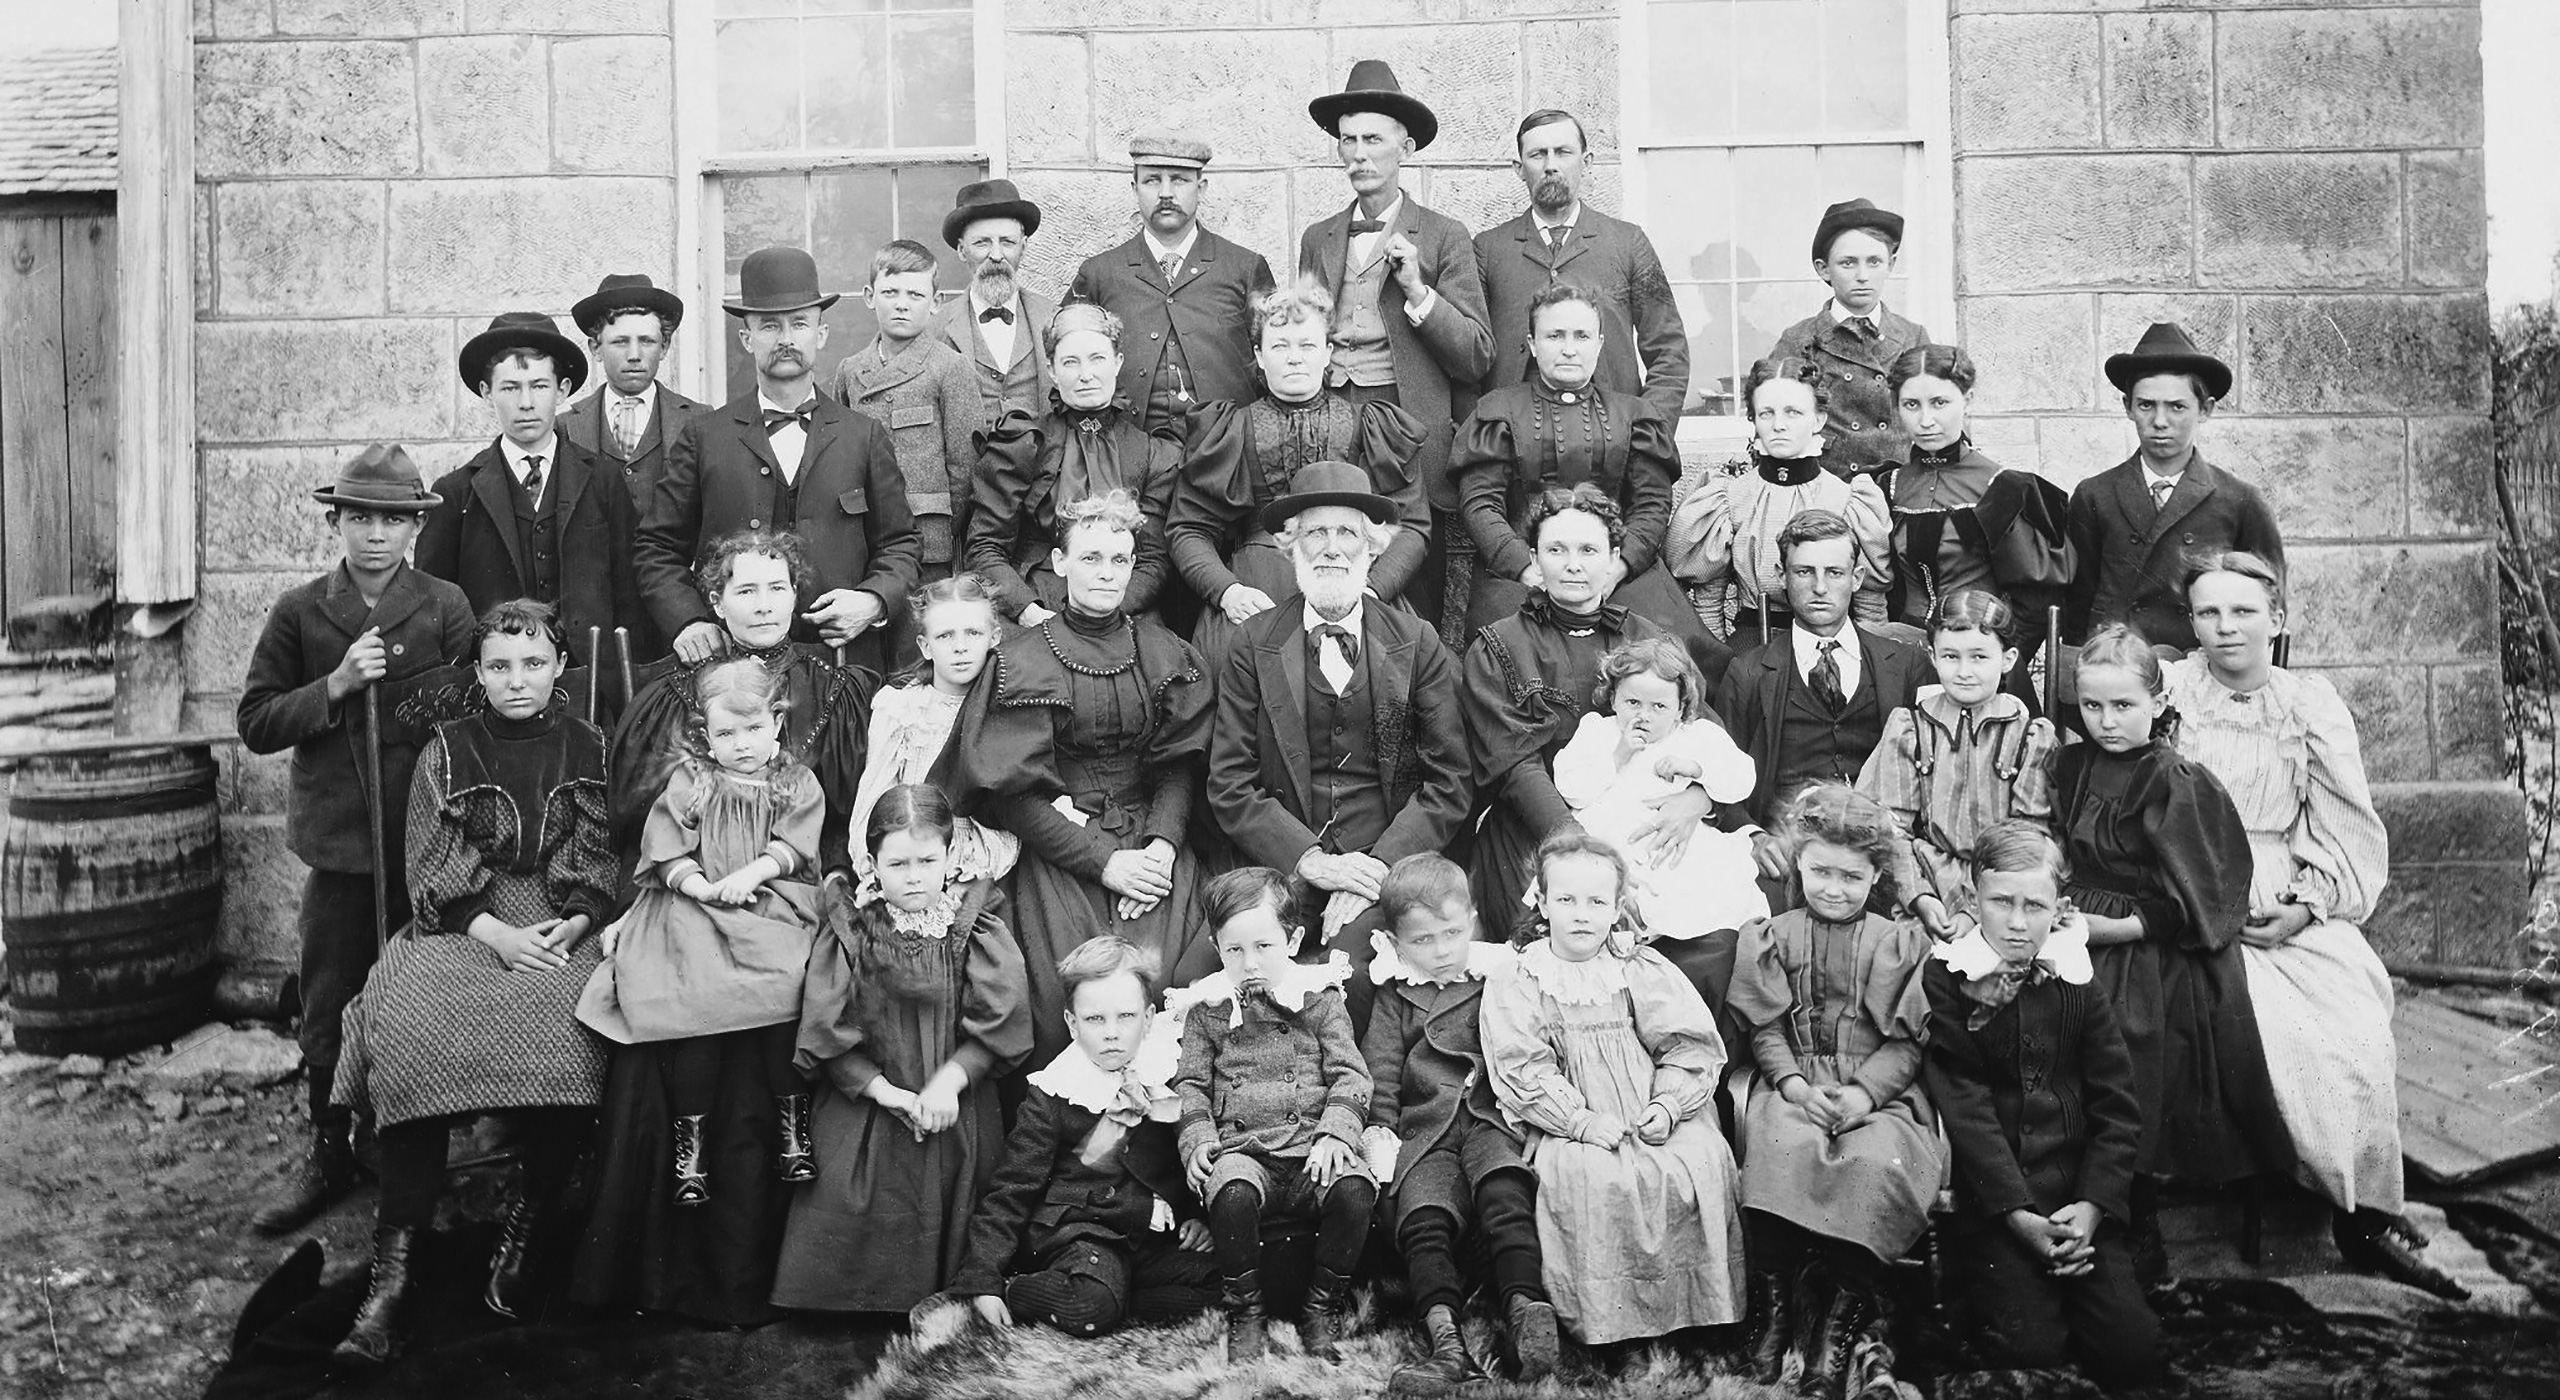 Edwards Family at Wreford, 1897